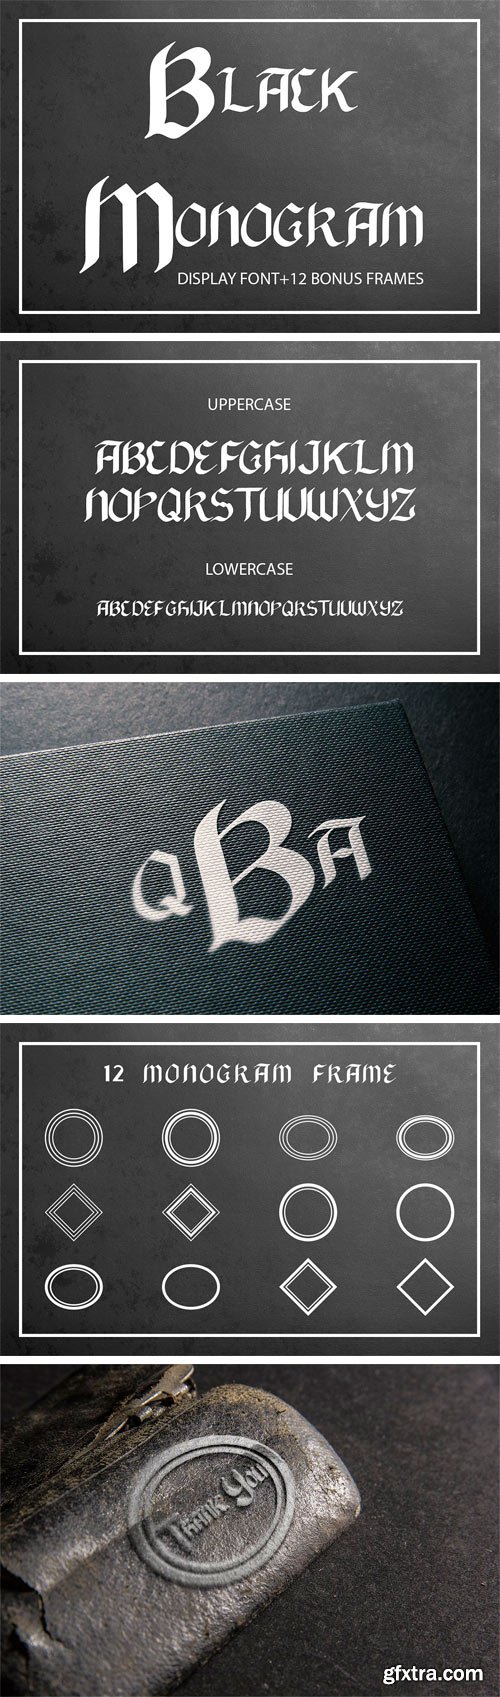 CM - Black Monogram Creator with Frames 2268395